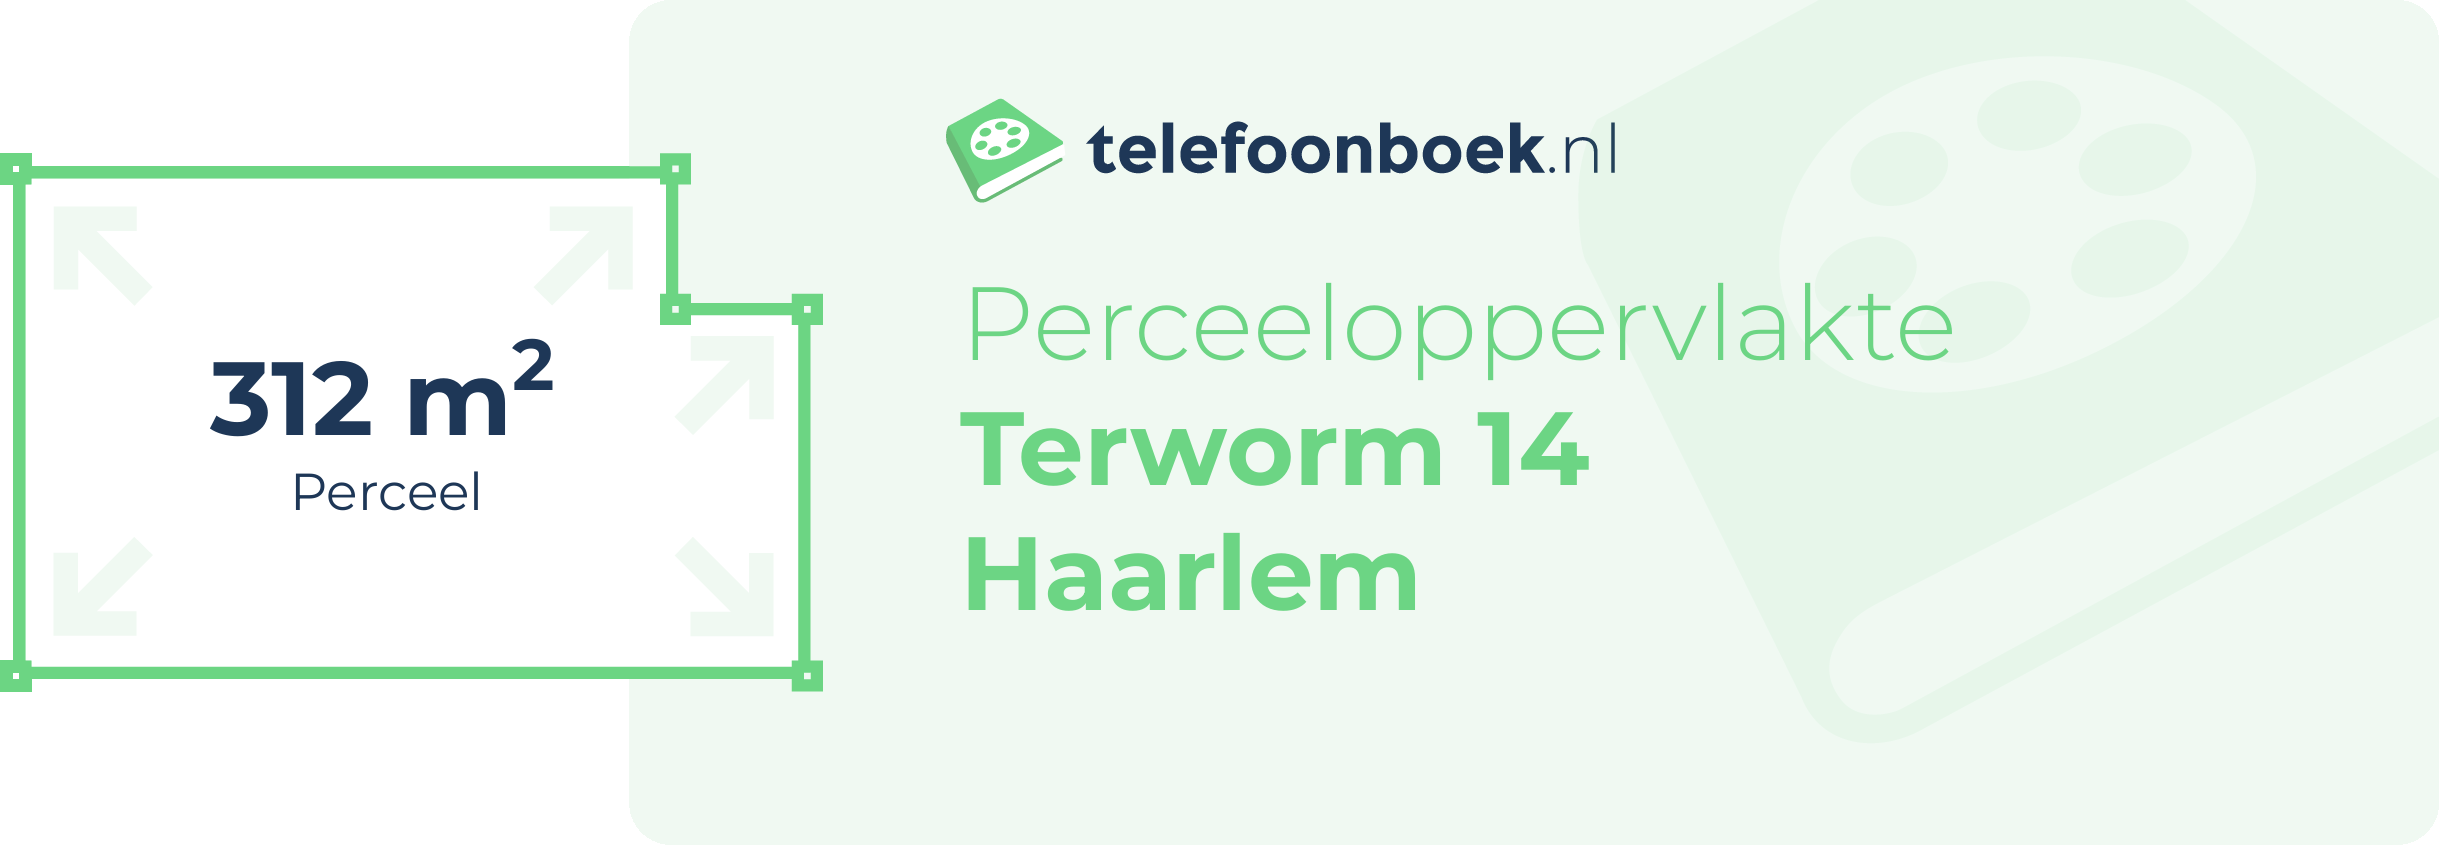 Perceeloppervlakte Terworm 14 Haarlem